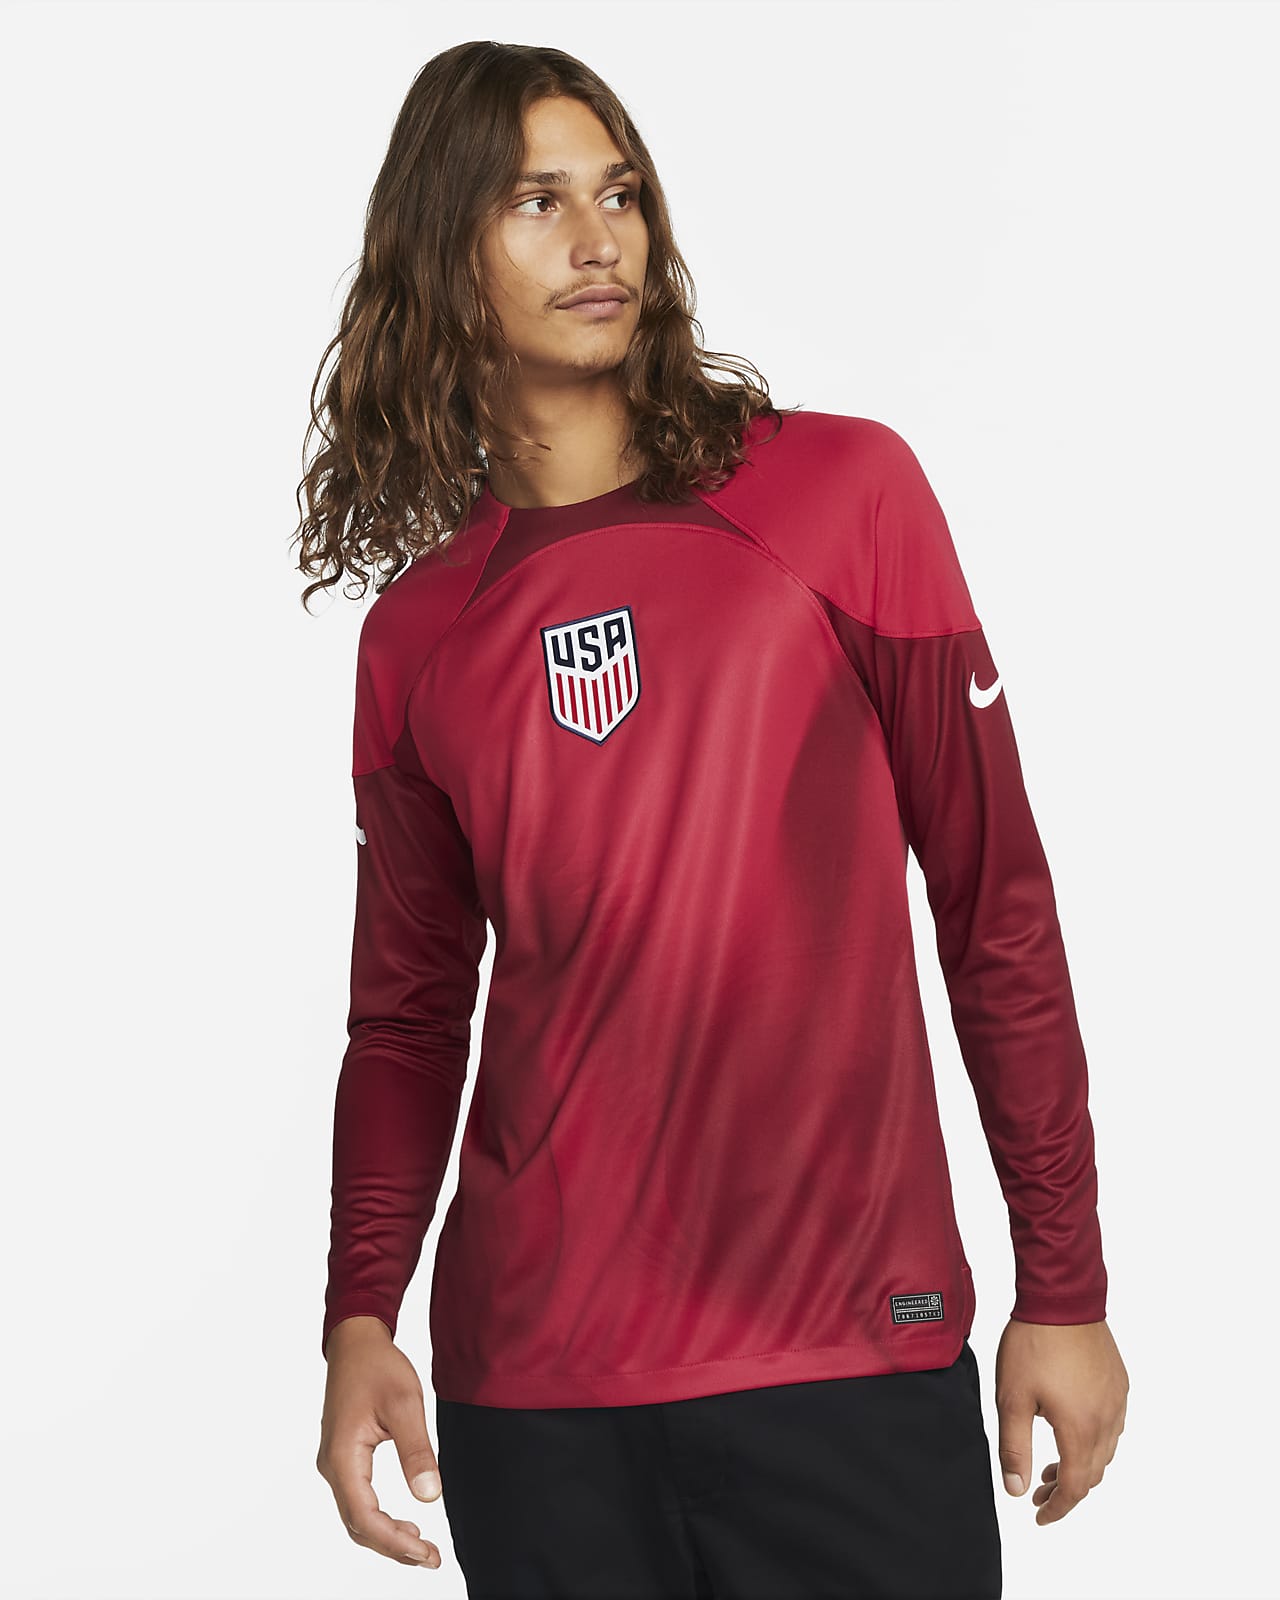 U.S. 2022/23 Stadium Goalkeeper Men's Nike Dri-FIT Soccer Jersey